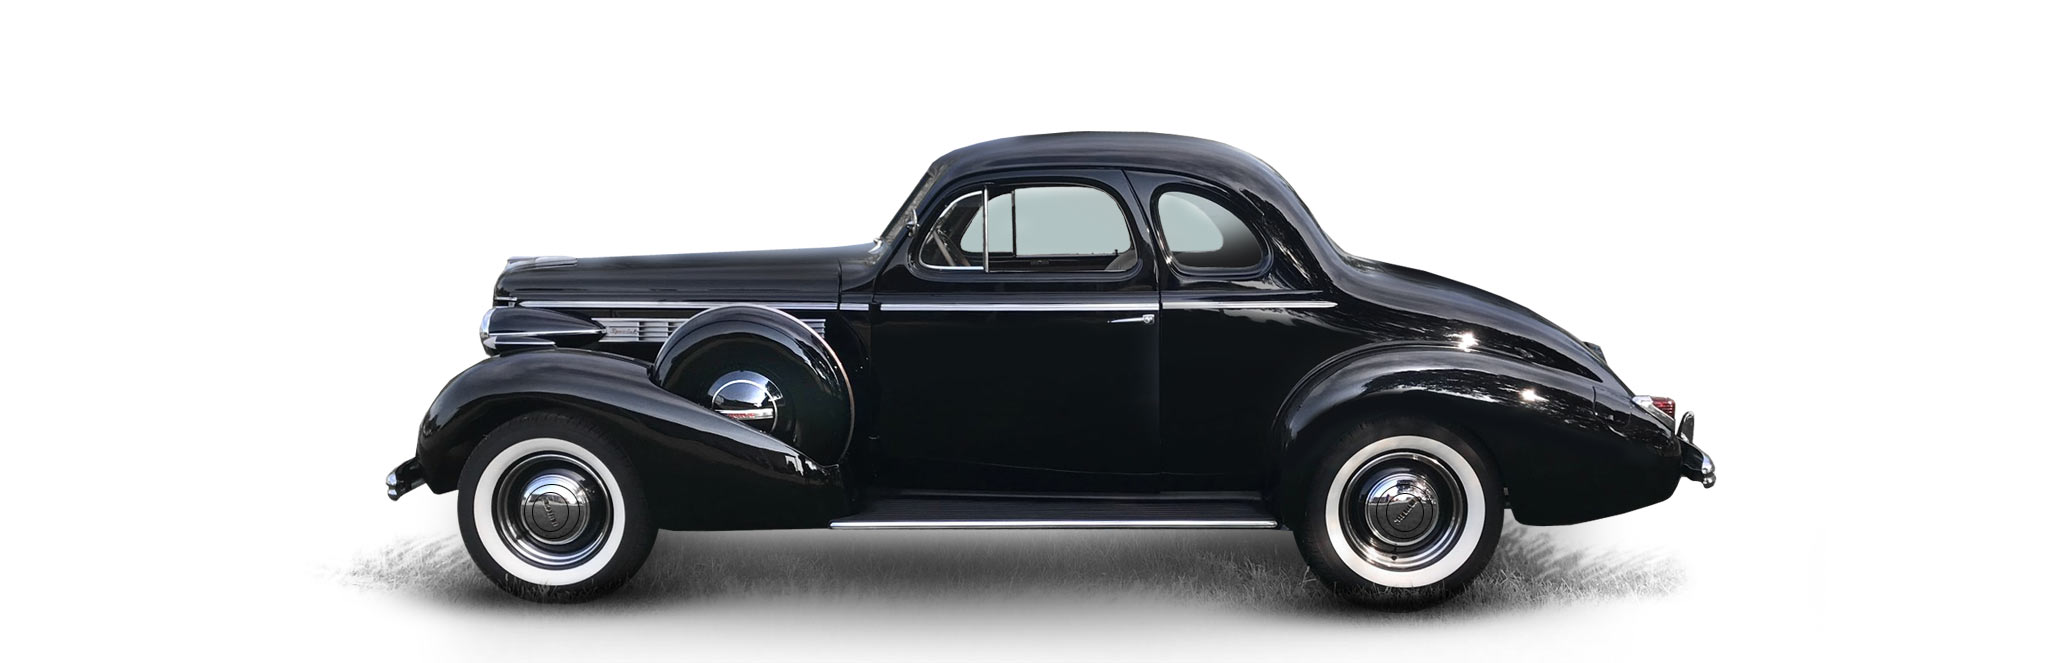 RELIC restored 1938 buick blackinternal